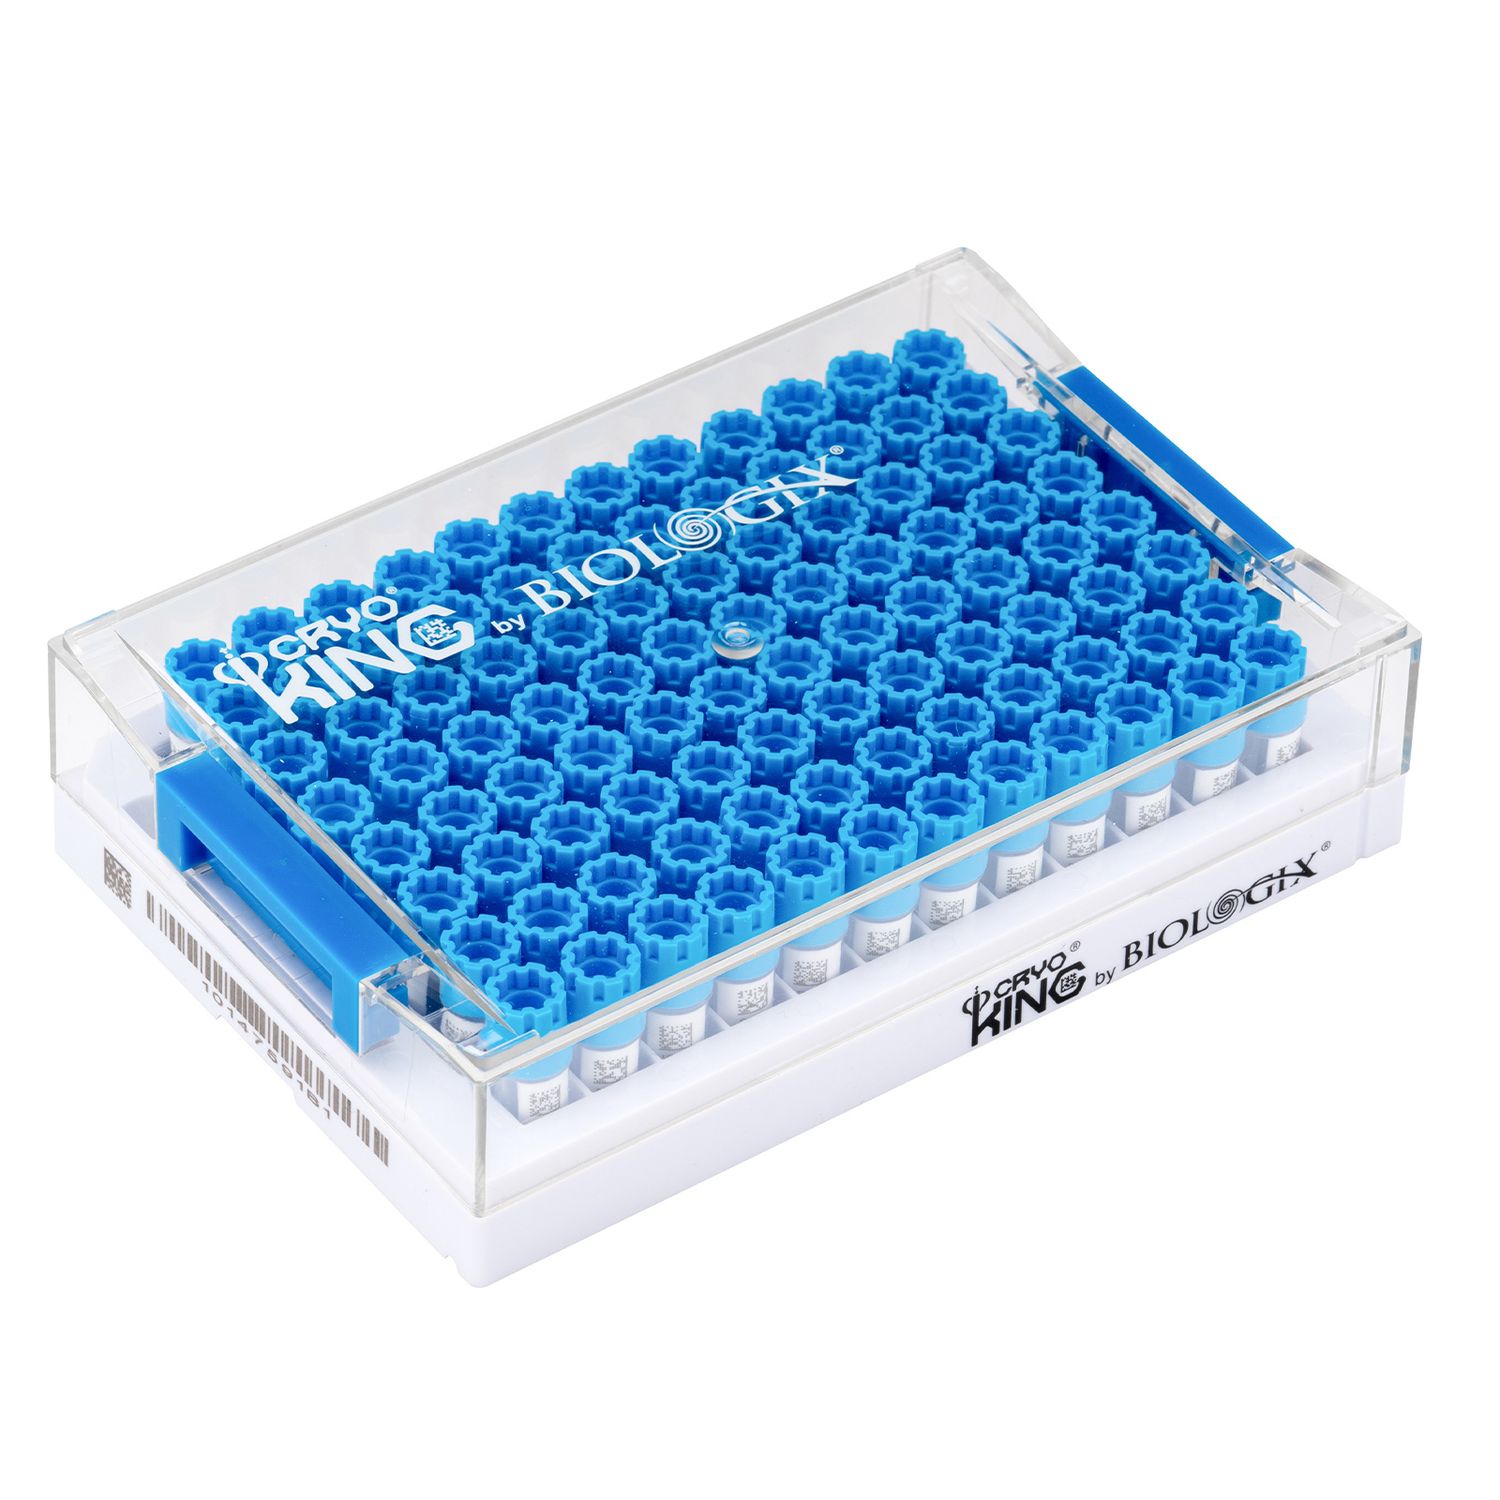 Biologix SBS Standard Cryogenic Vials External Thread 0.4 ml, 96-Well, 10 Bags/Pack,2 Packs/Case